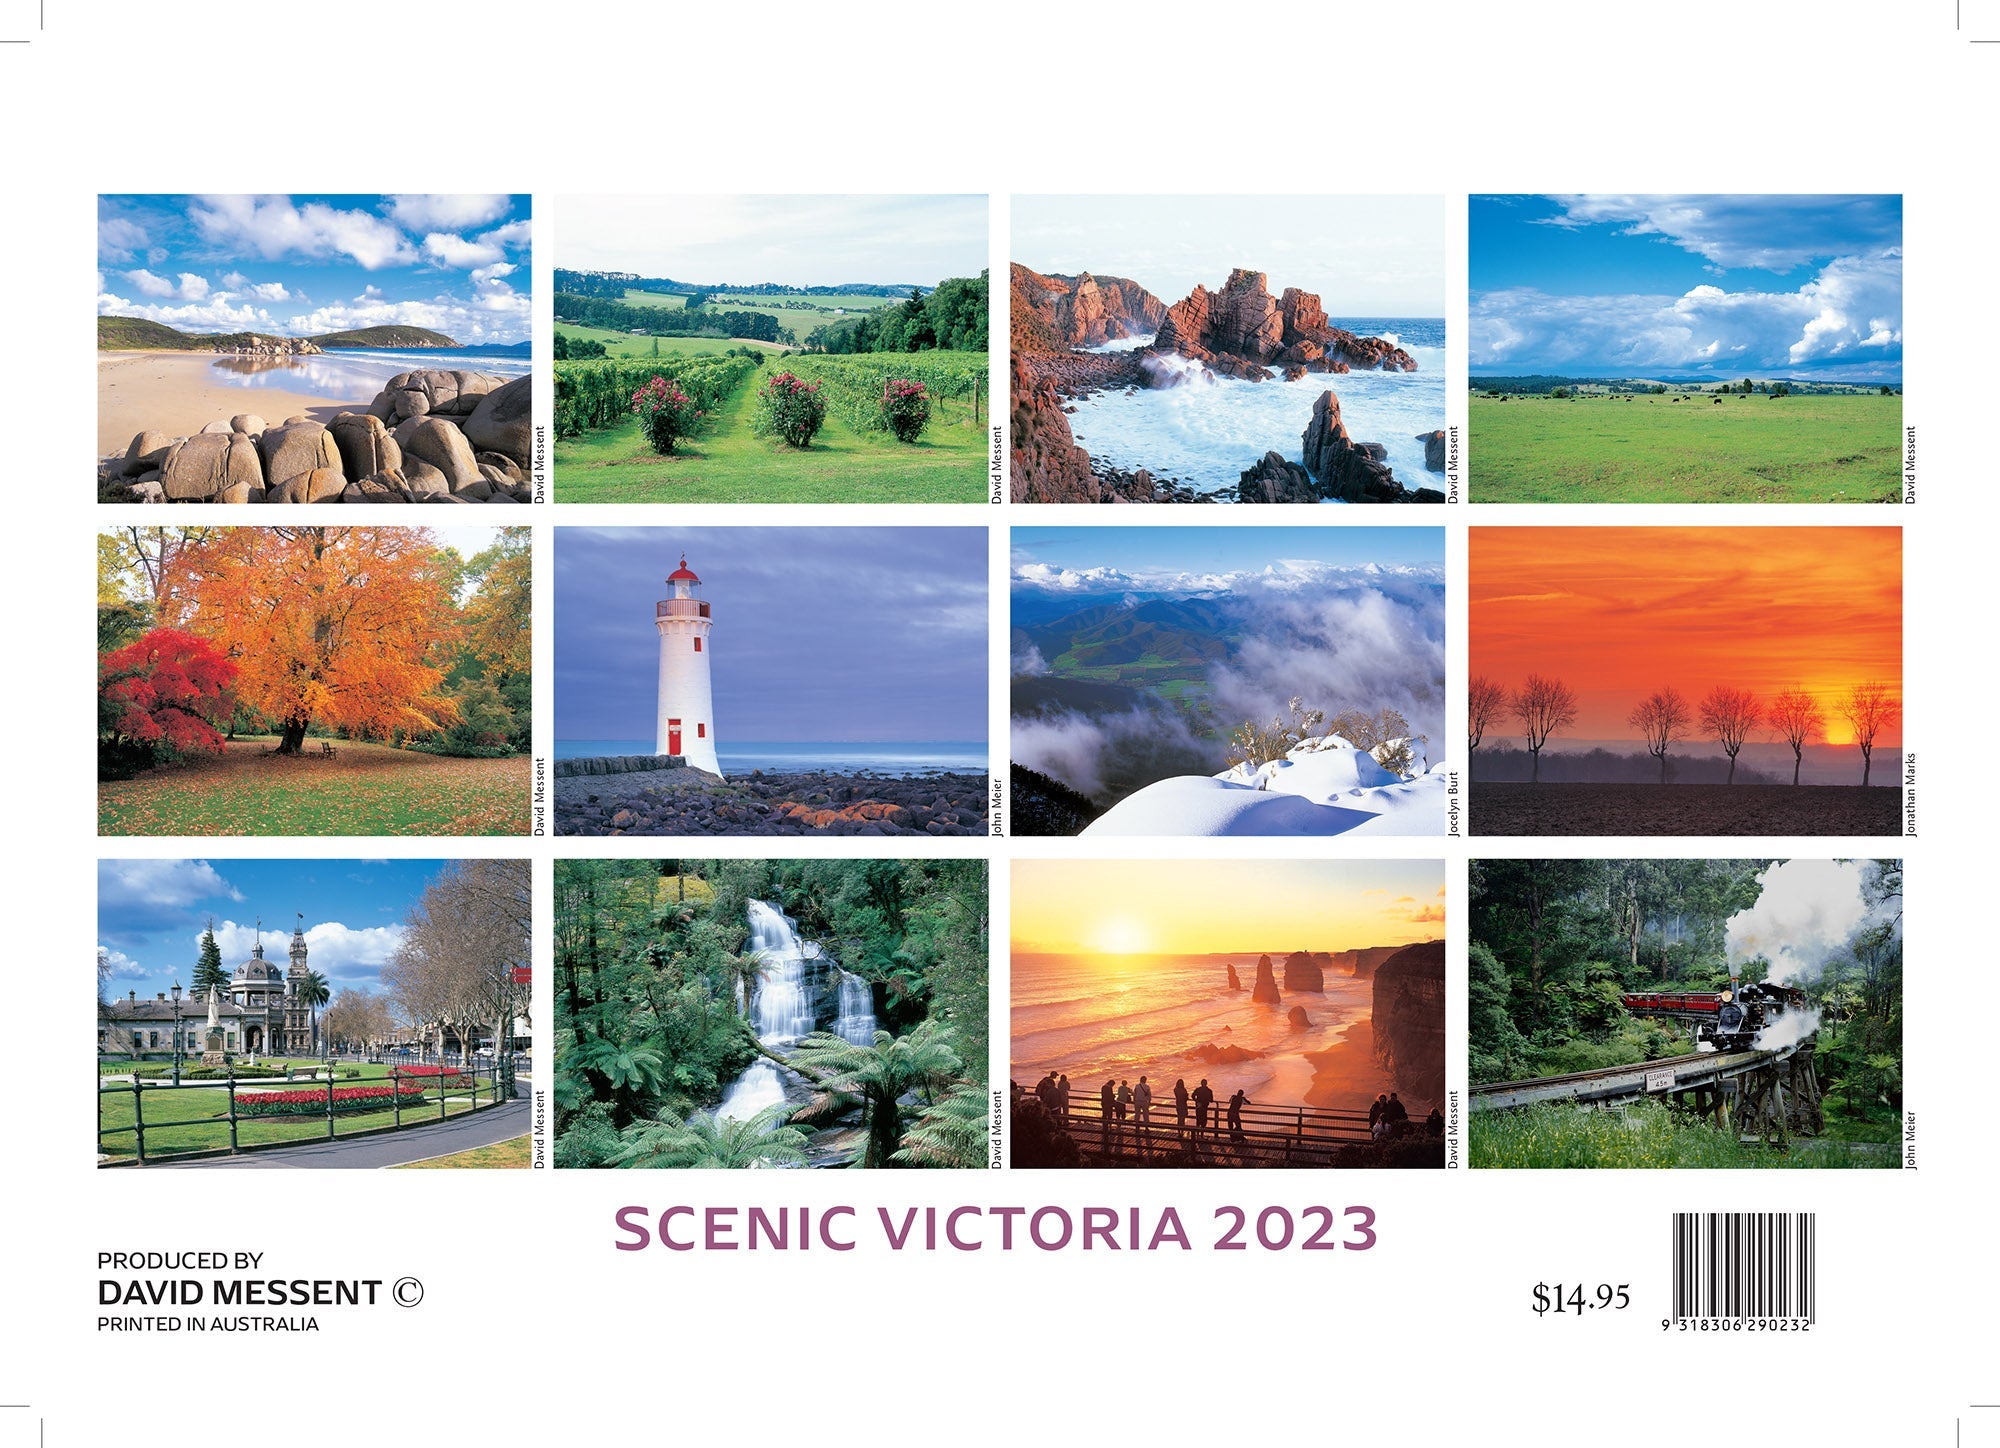 2023 Scenic Victoria by David Messent - Horizontal Wall Calendar